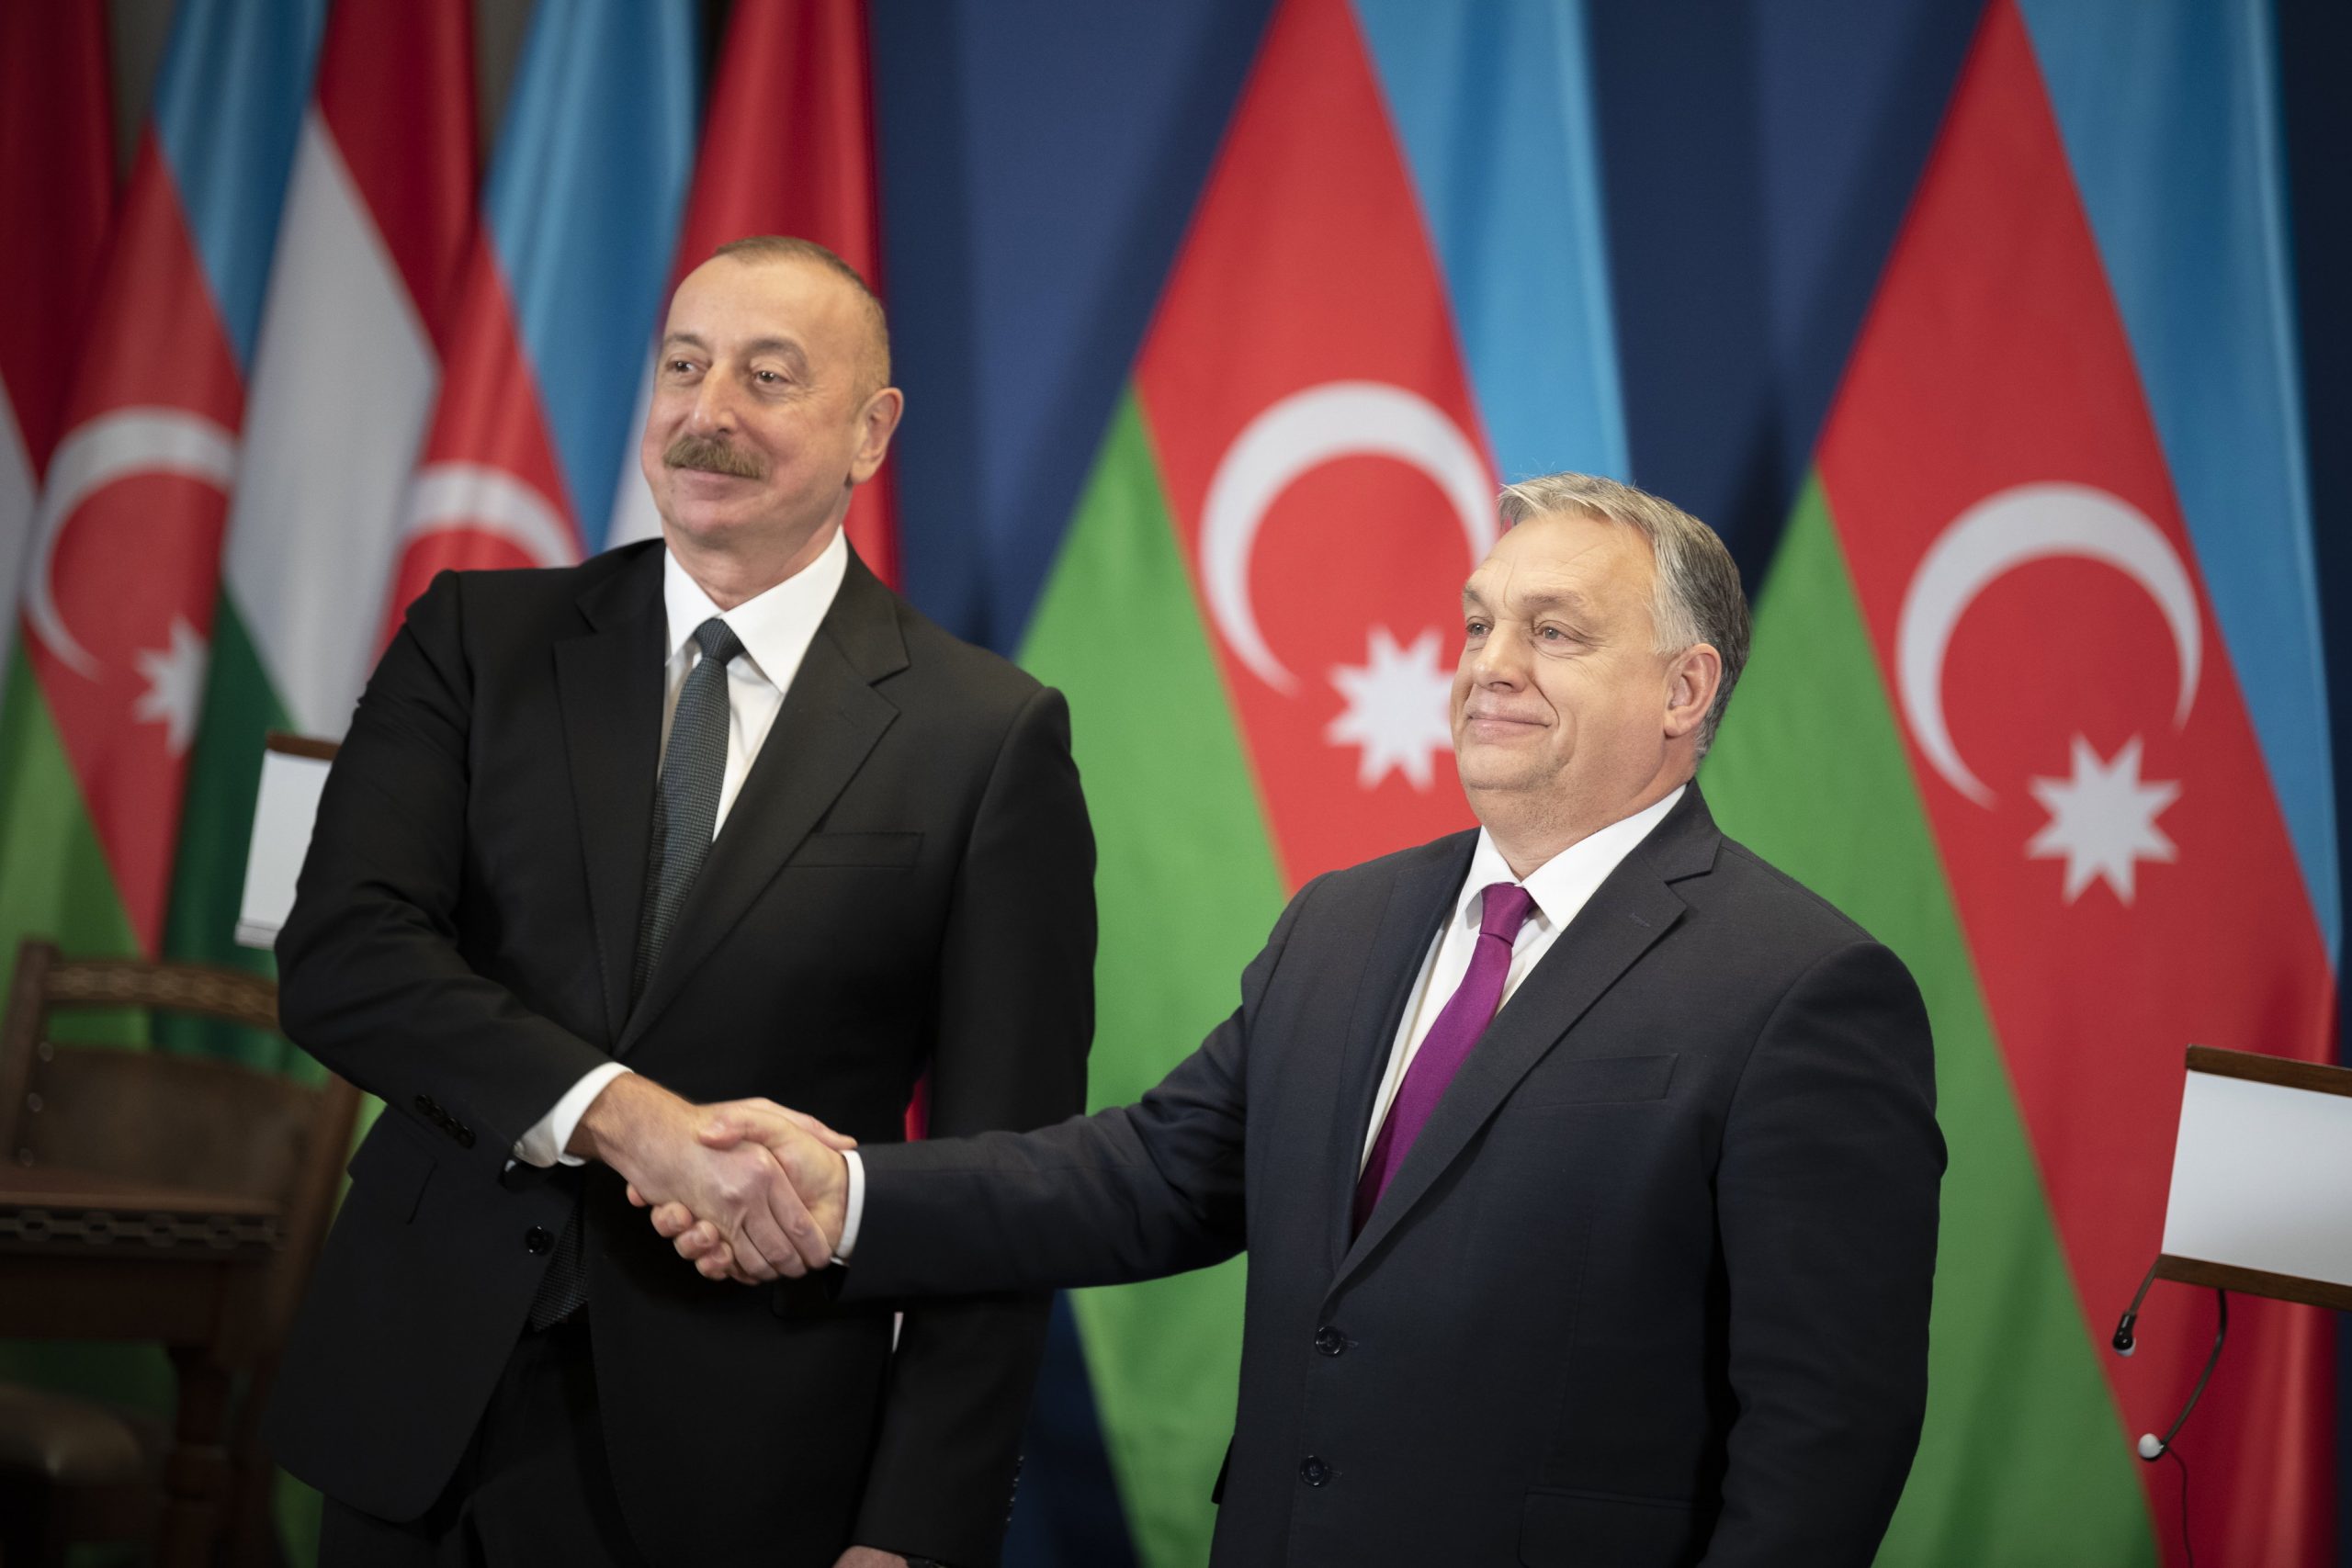 Key Partnership Established between Hungary and Azerbaijan